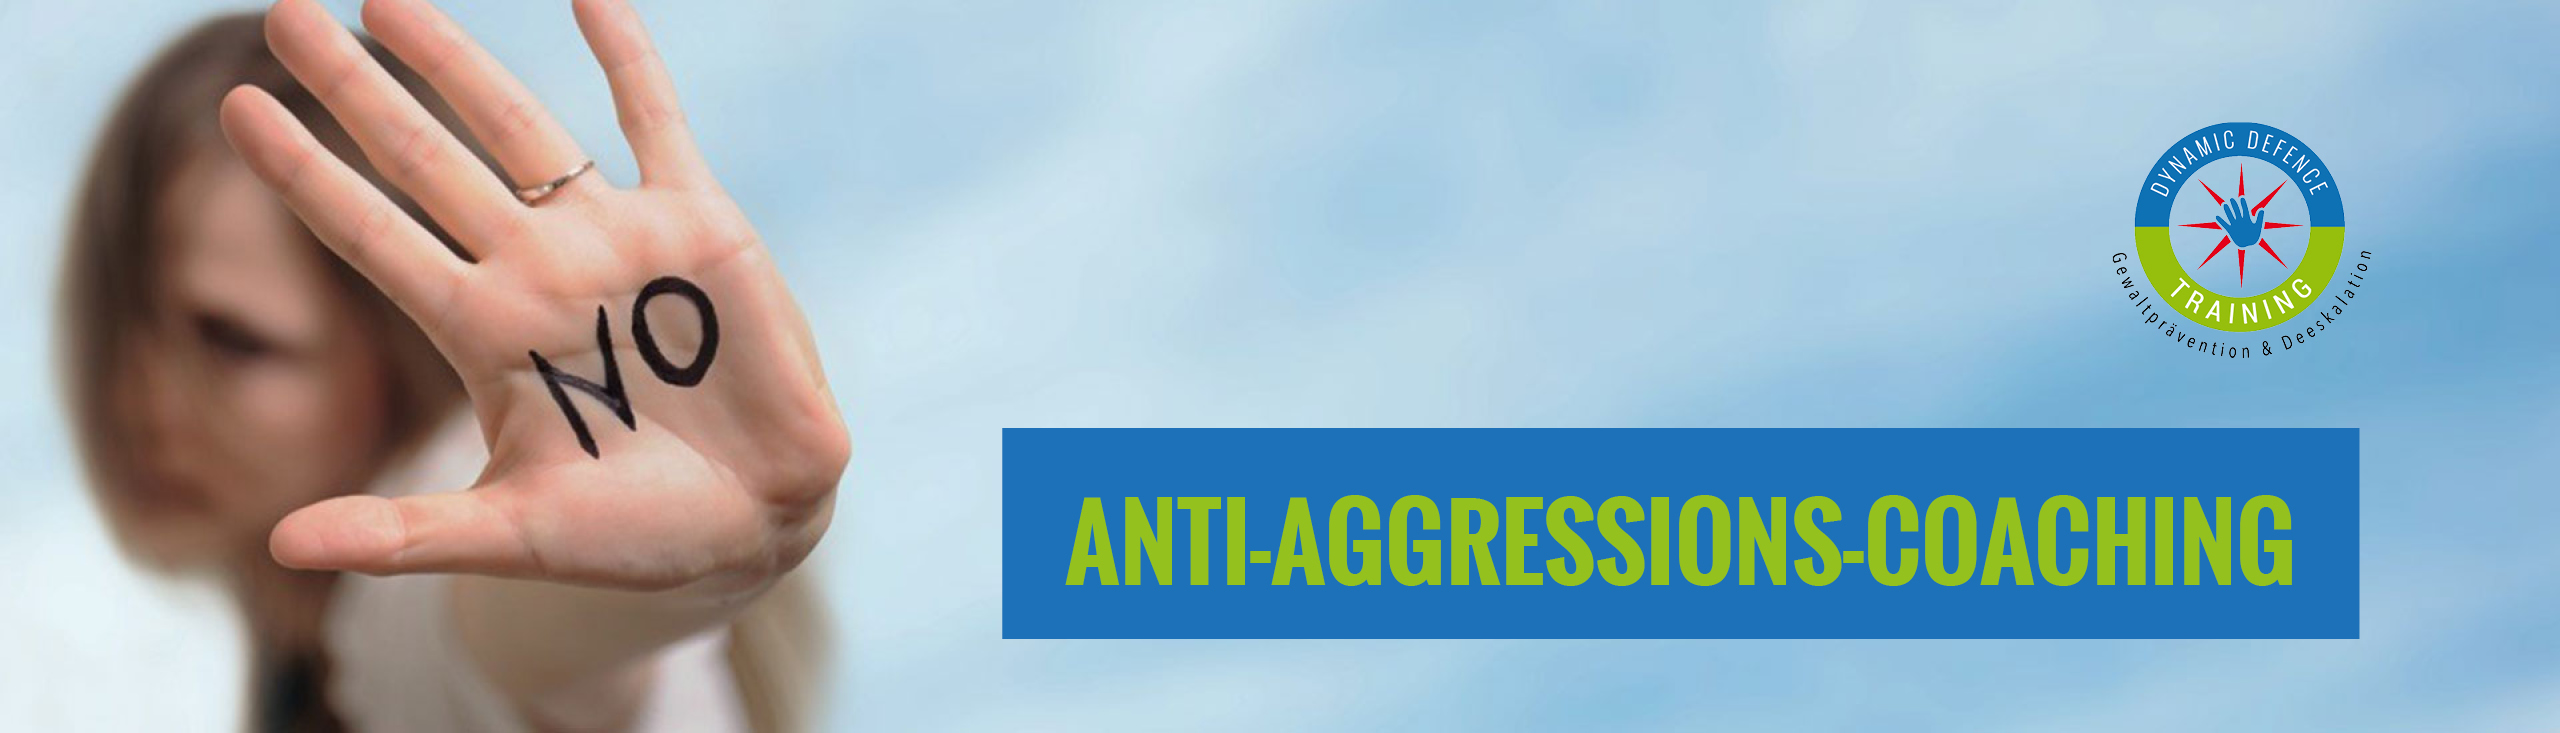 web_banner-anti-aggressions-coaching.jpg